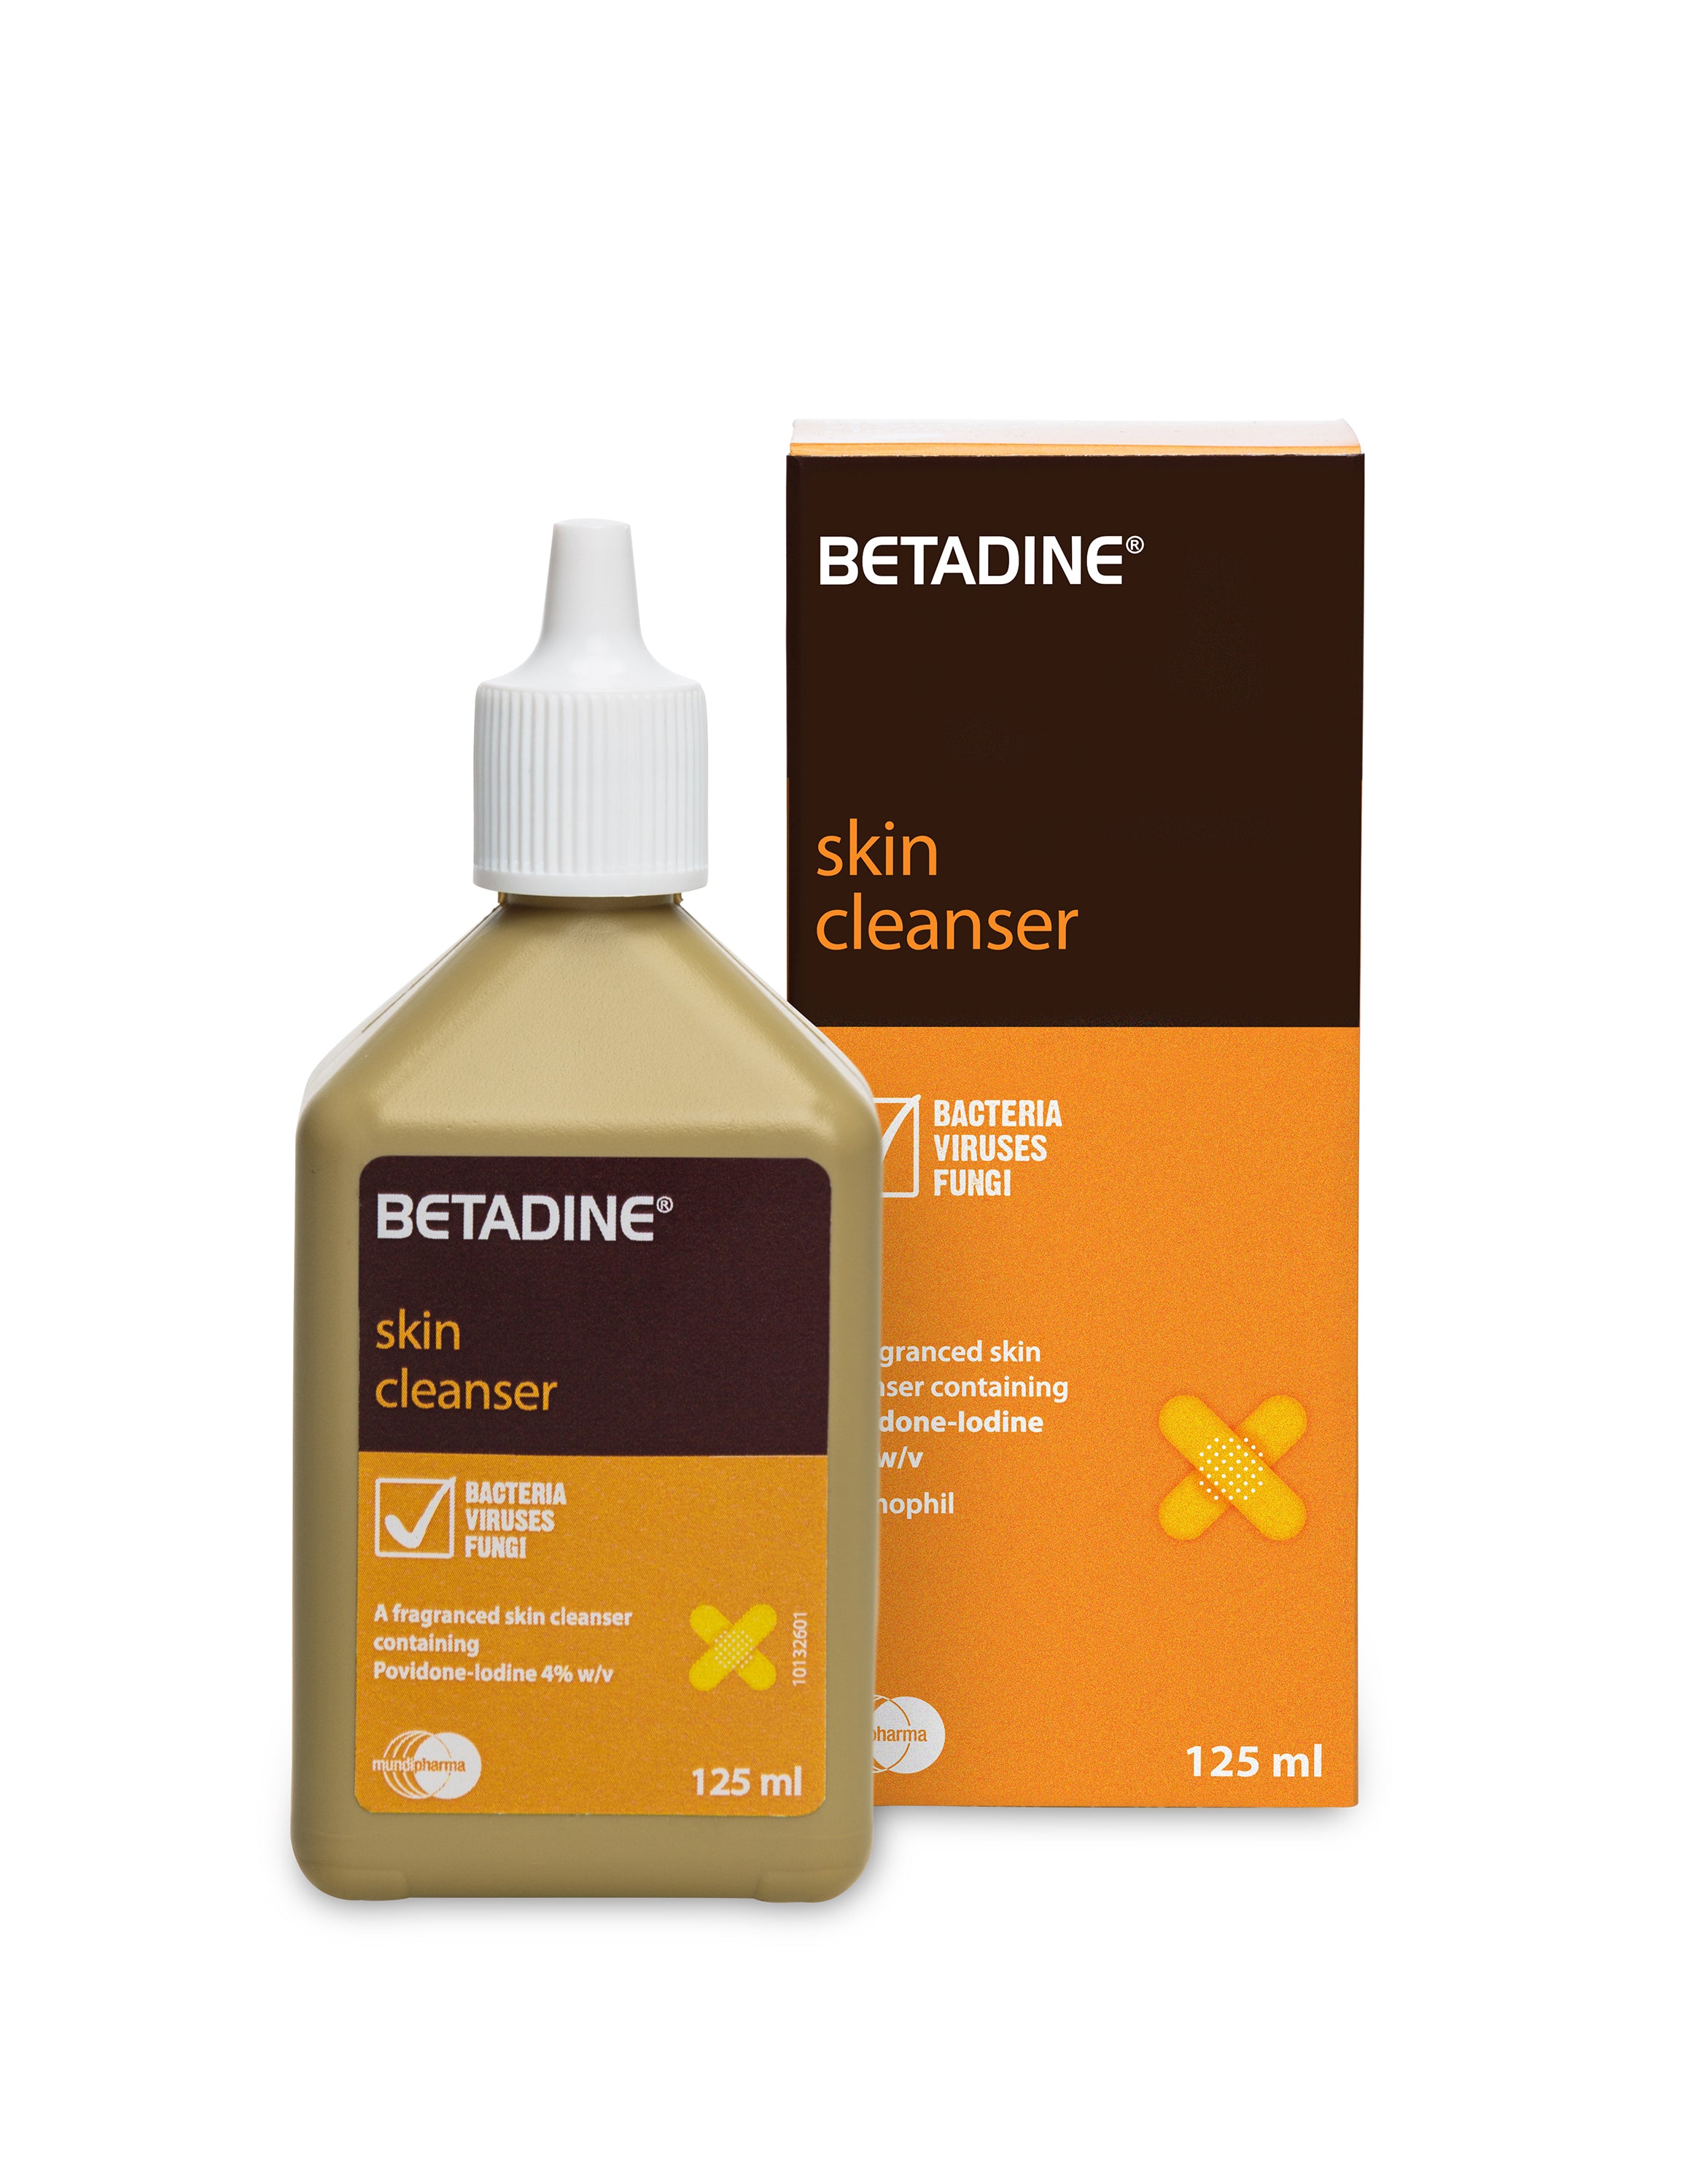 Povidone-Iodine (BETADINE®) Skin Cleanser 120mL